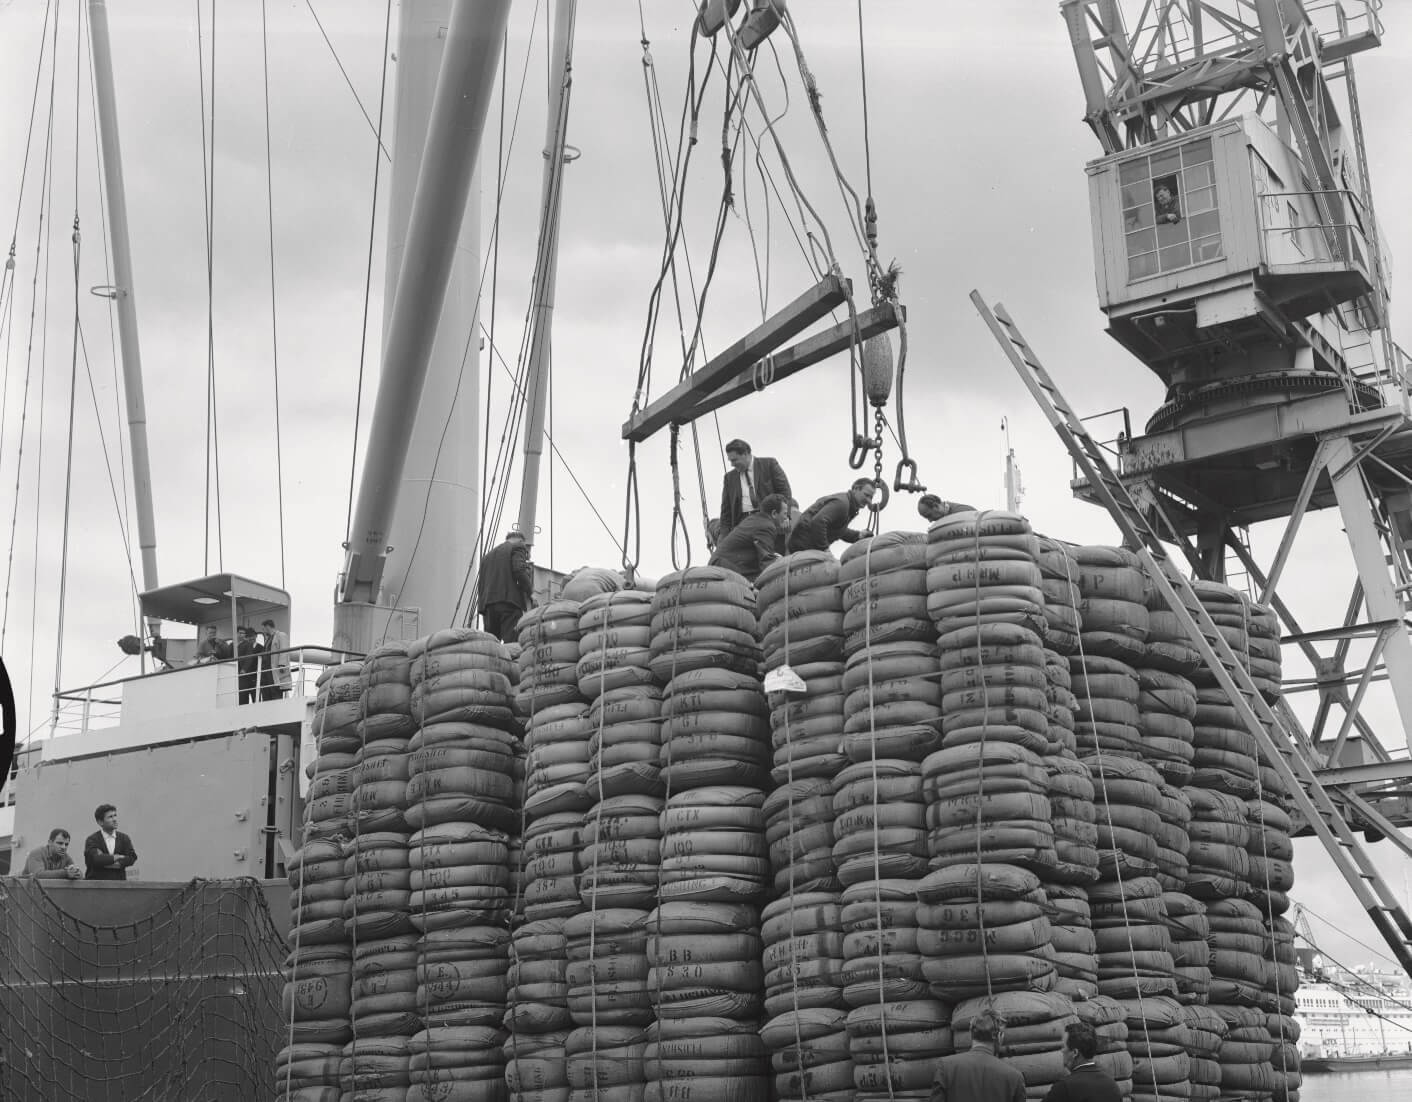 Wool cargo, c.1940. PROV, VPRS 8363-p0002-000002-68134